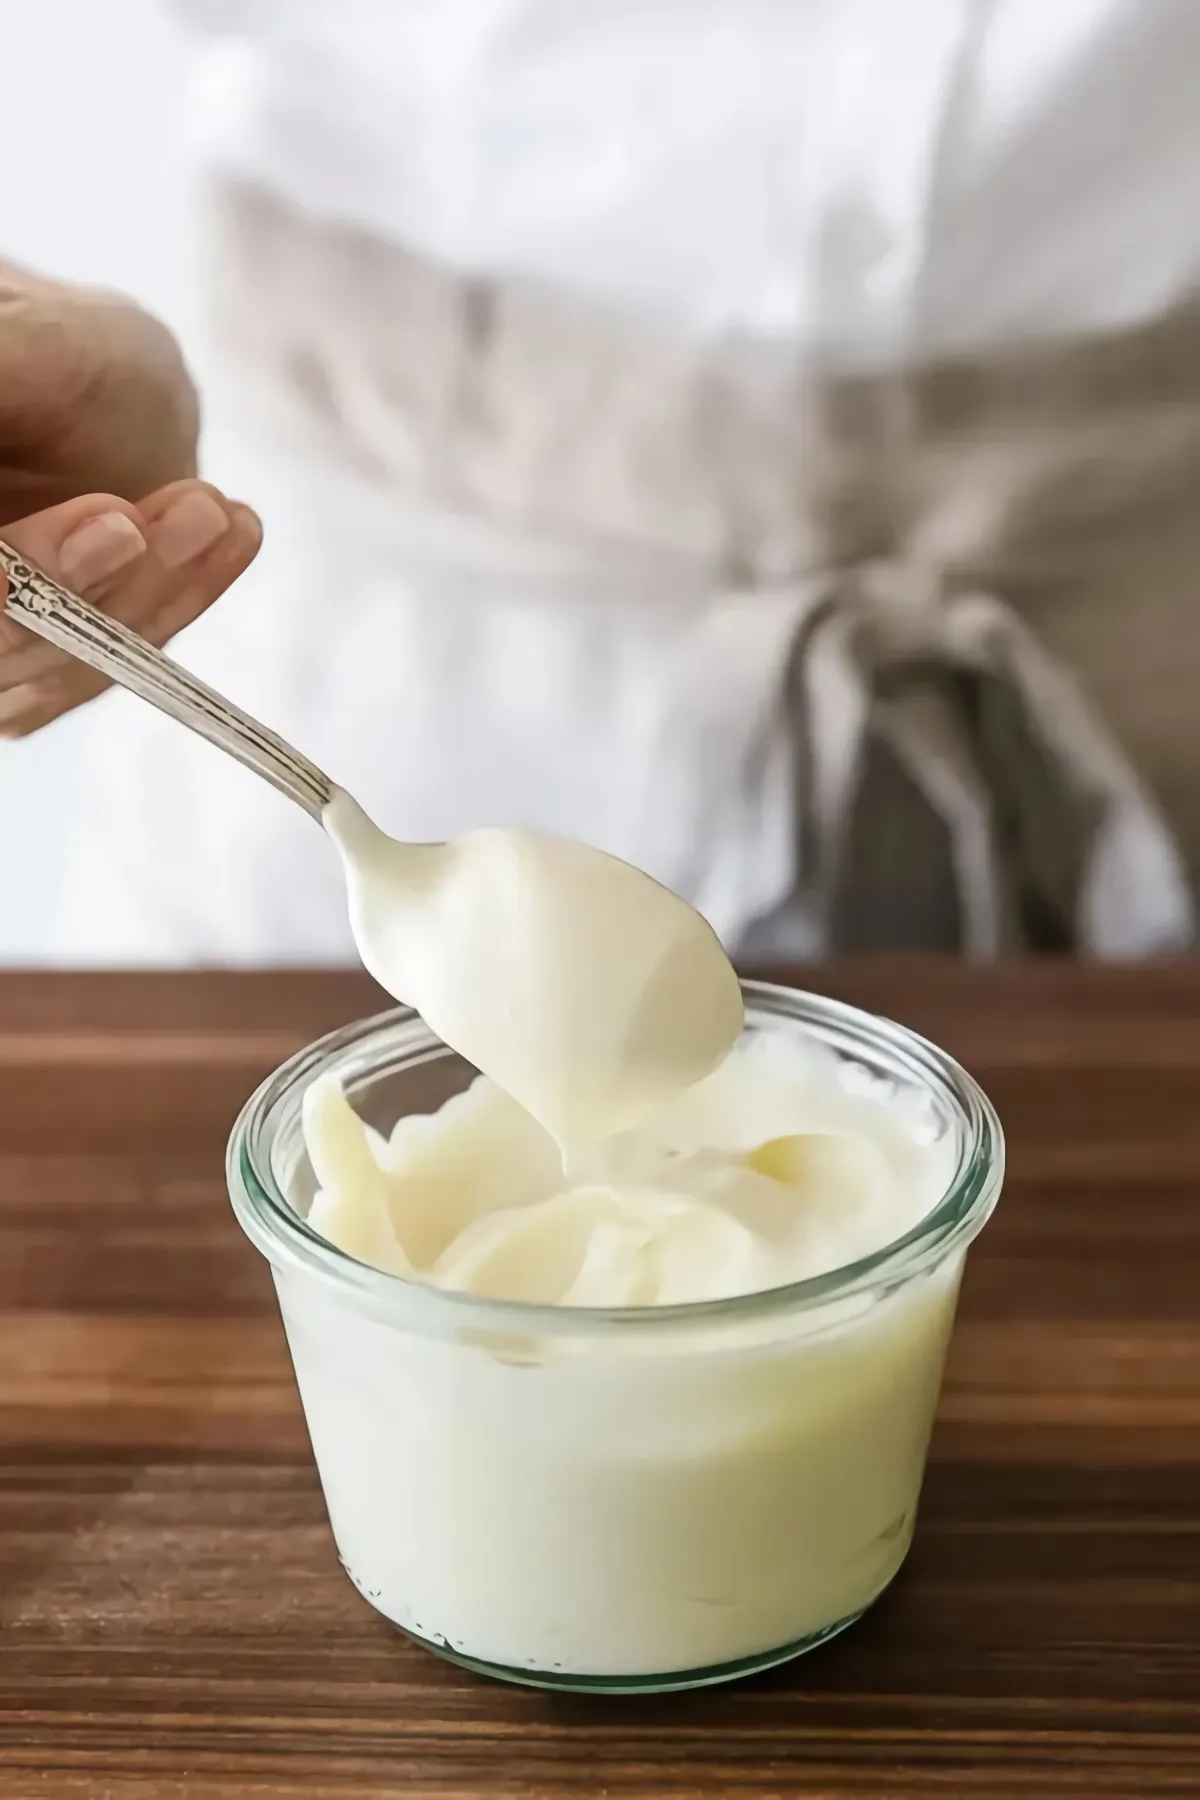 beschädigtes holz mit mayonnaise behandeln haushalt tipps